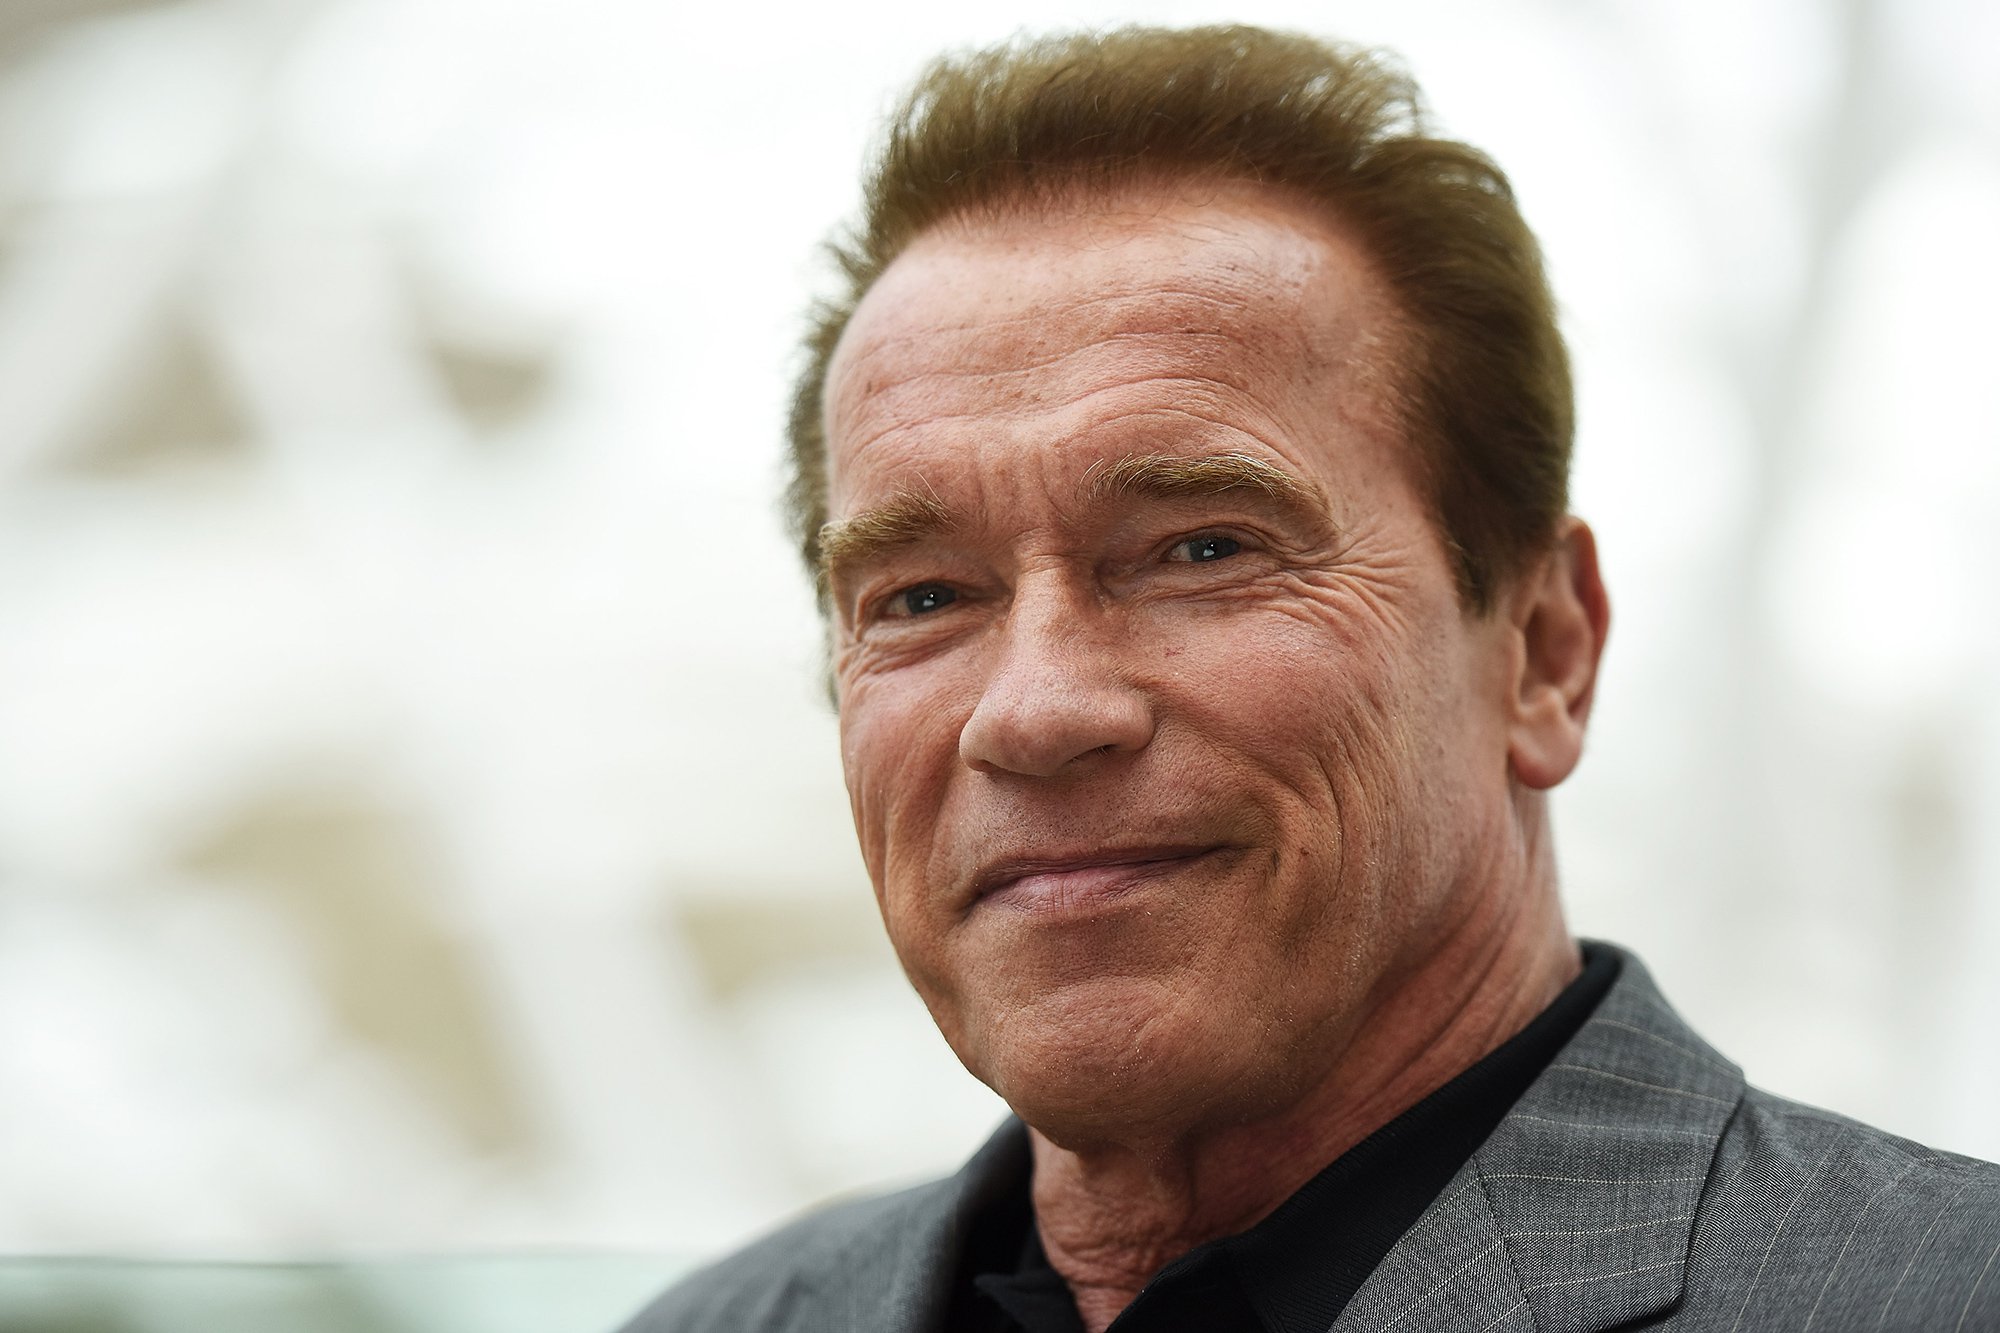 Terminator star, Arnold Schwarzenegger. [Photo credit: